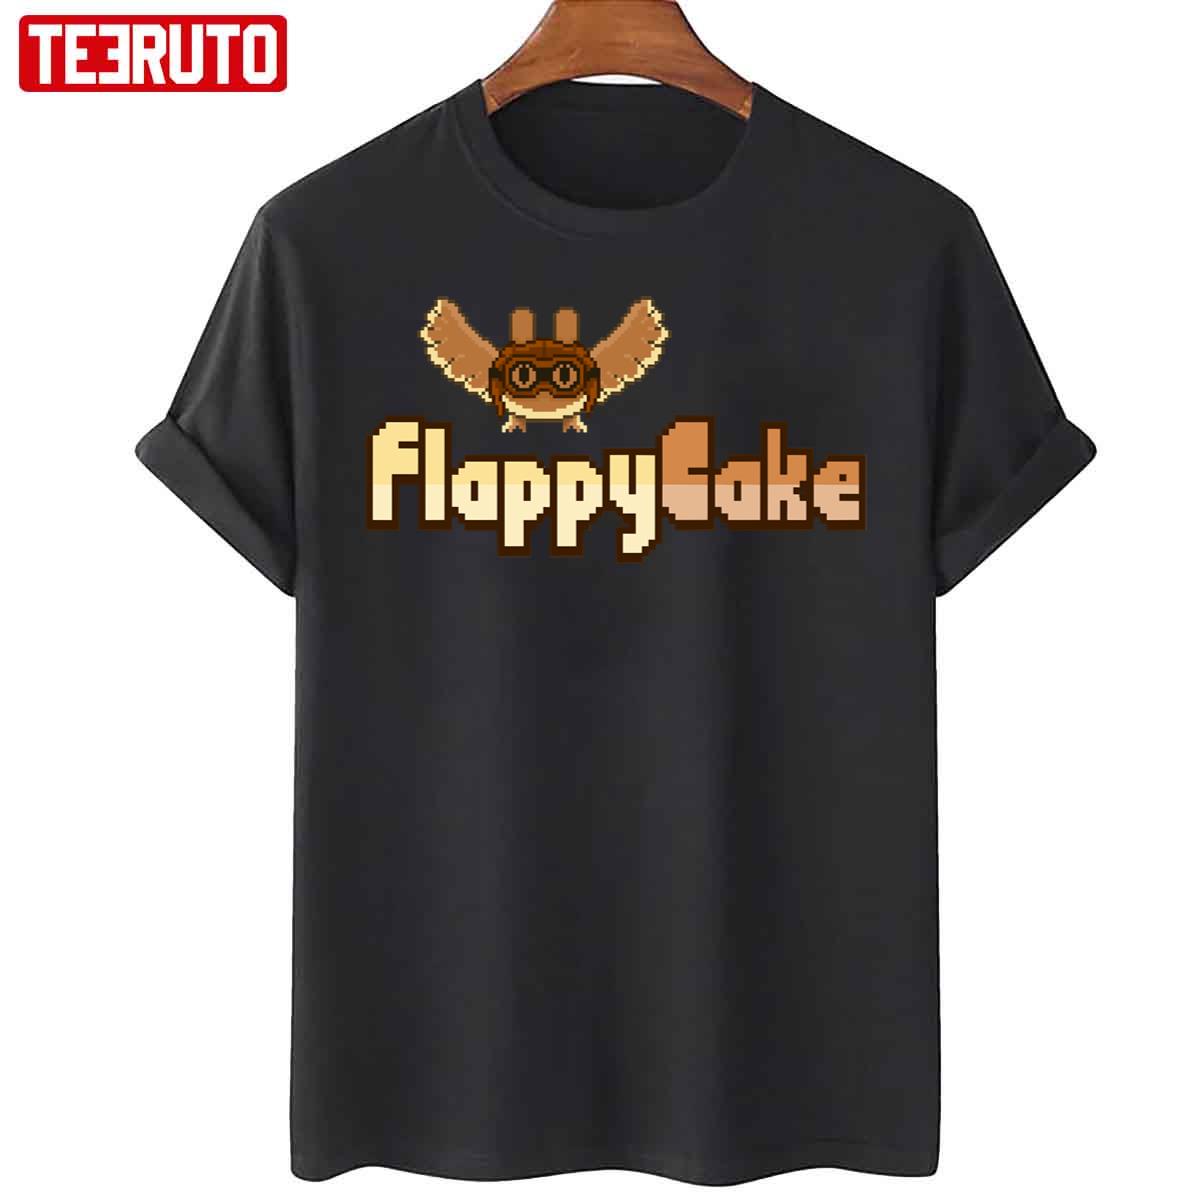 Flappycake Original Edition Pancakeswap Unisex T-Shirt